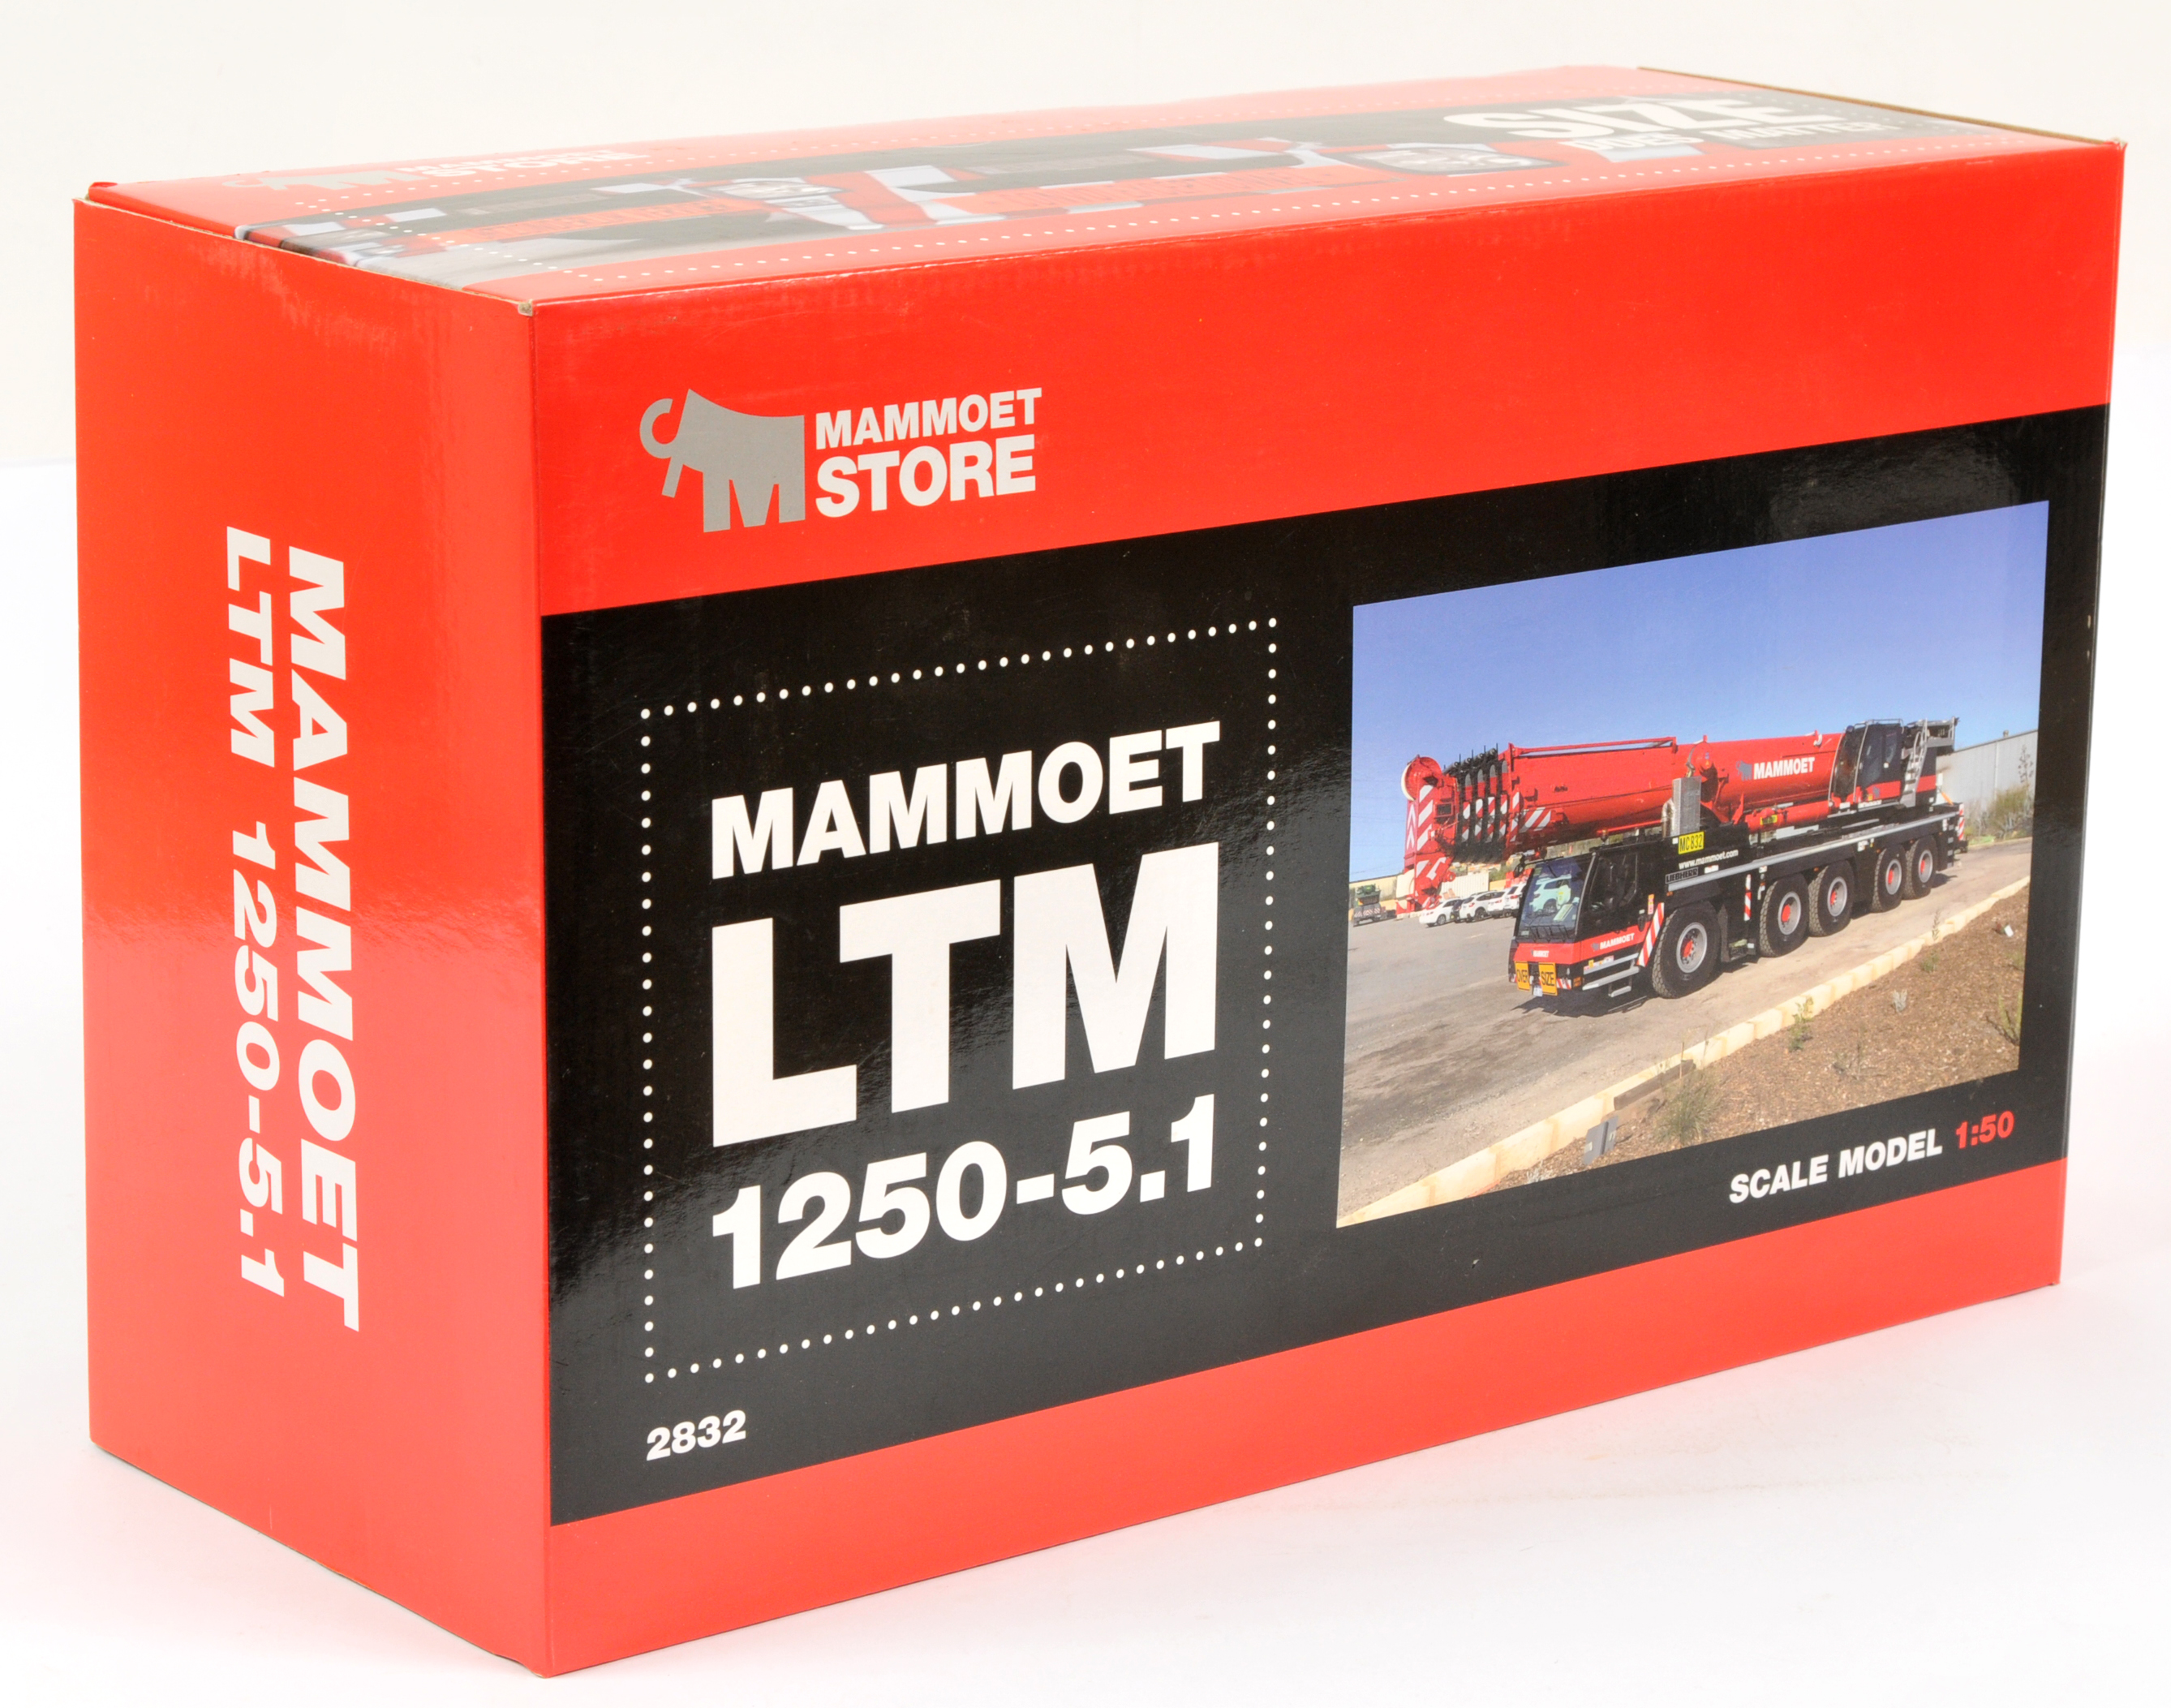 NZG  (1/50th) "Mammoet" LTM 1250-5.1 Mobile Crane - Red and Black -  Near Mint in  Good Plus card...